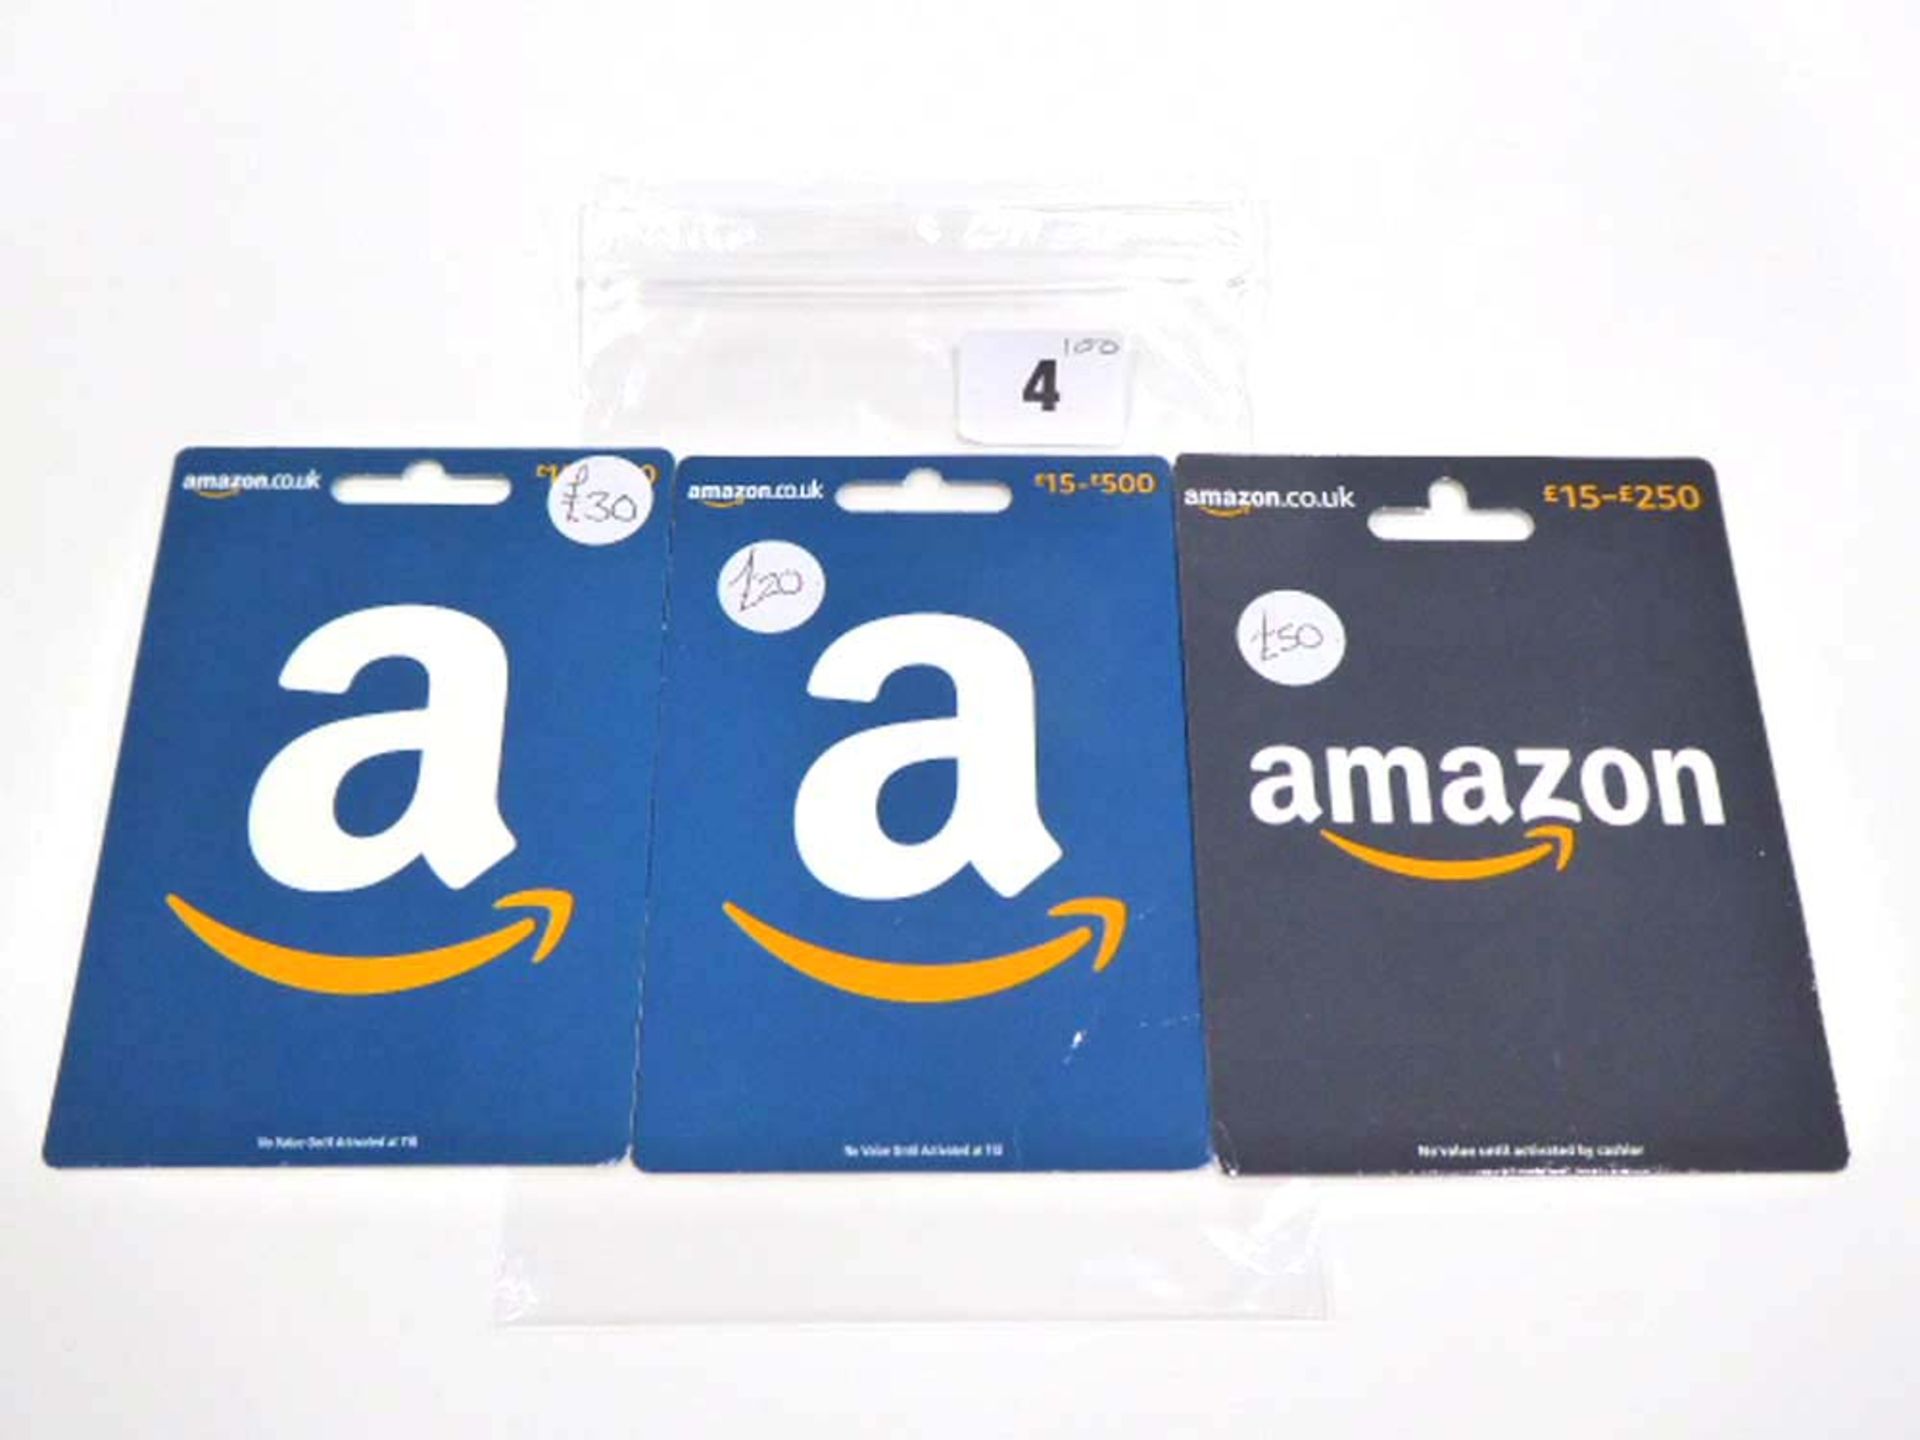 Amazon (x3) - Total face value £100